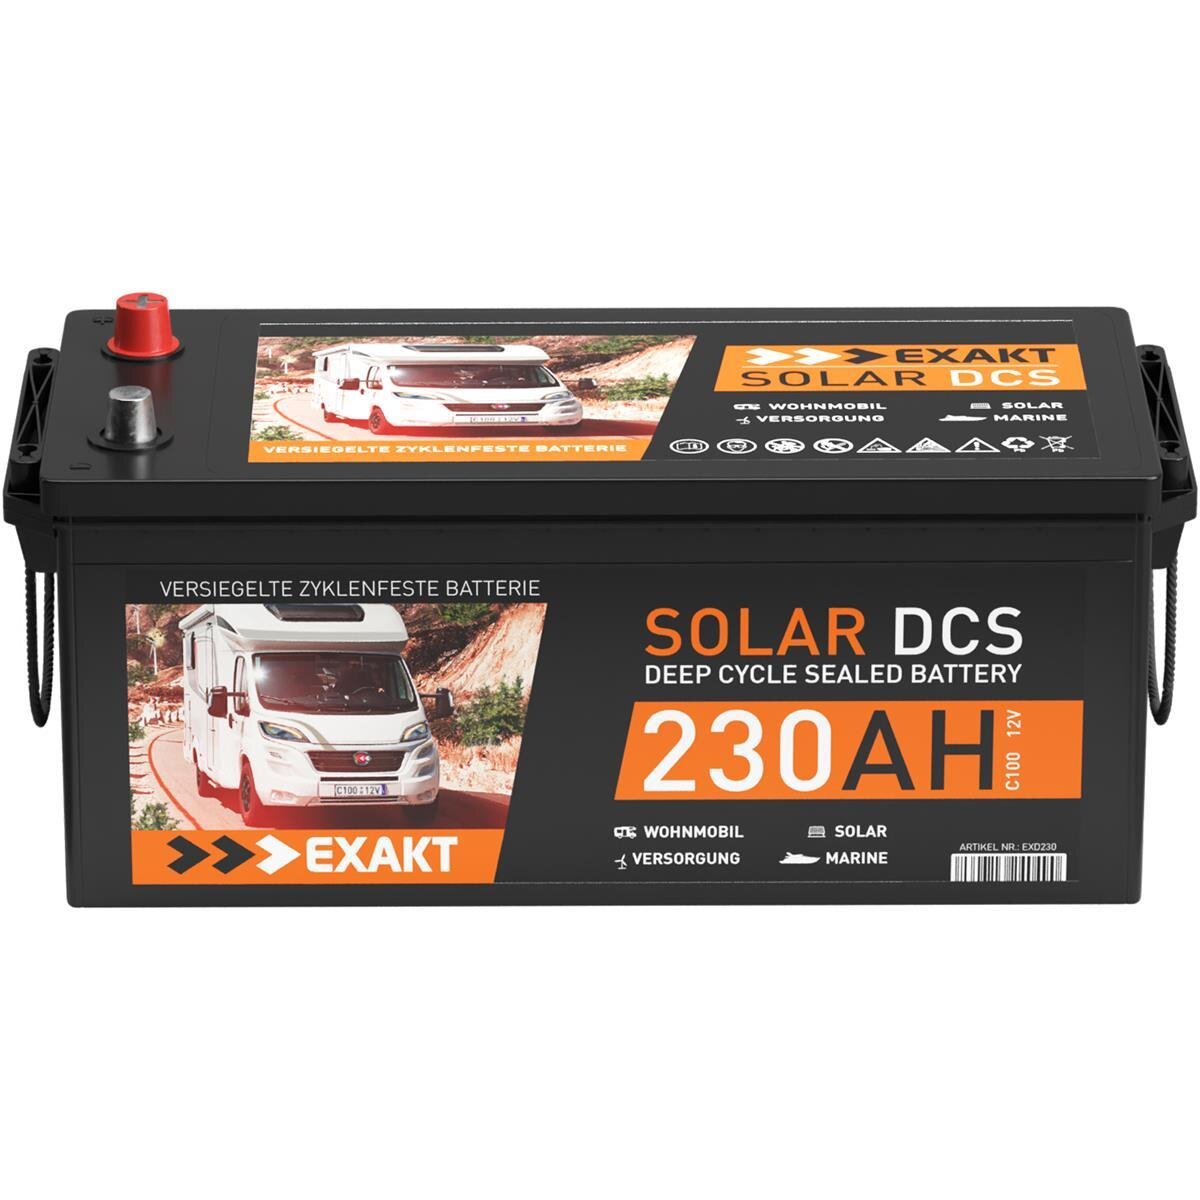 EXAKT Solar DCS Solarbatterie 230Ah 12V, 234,90 €